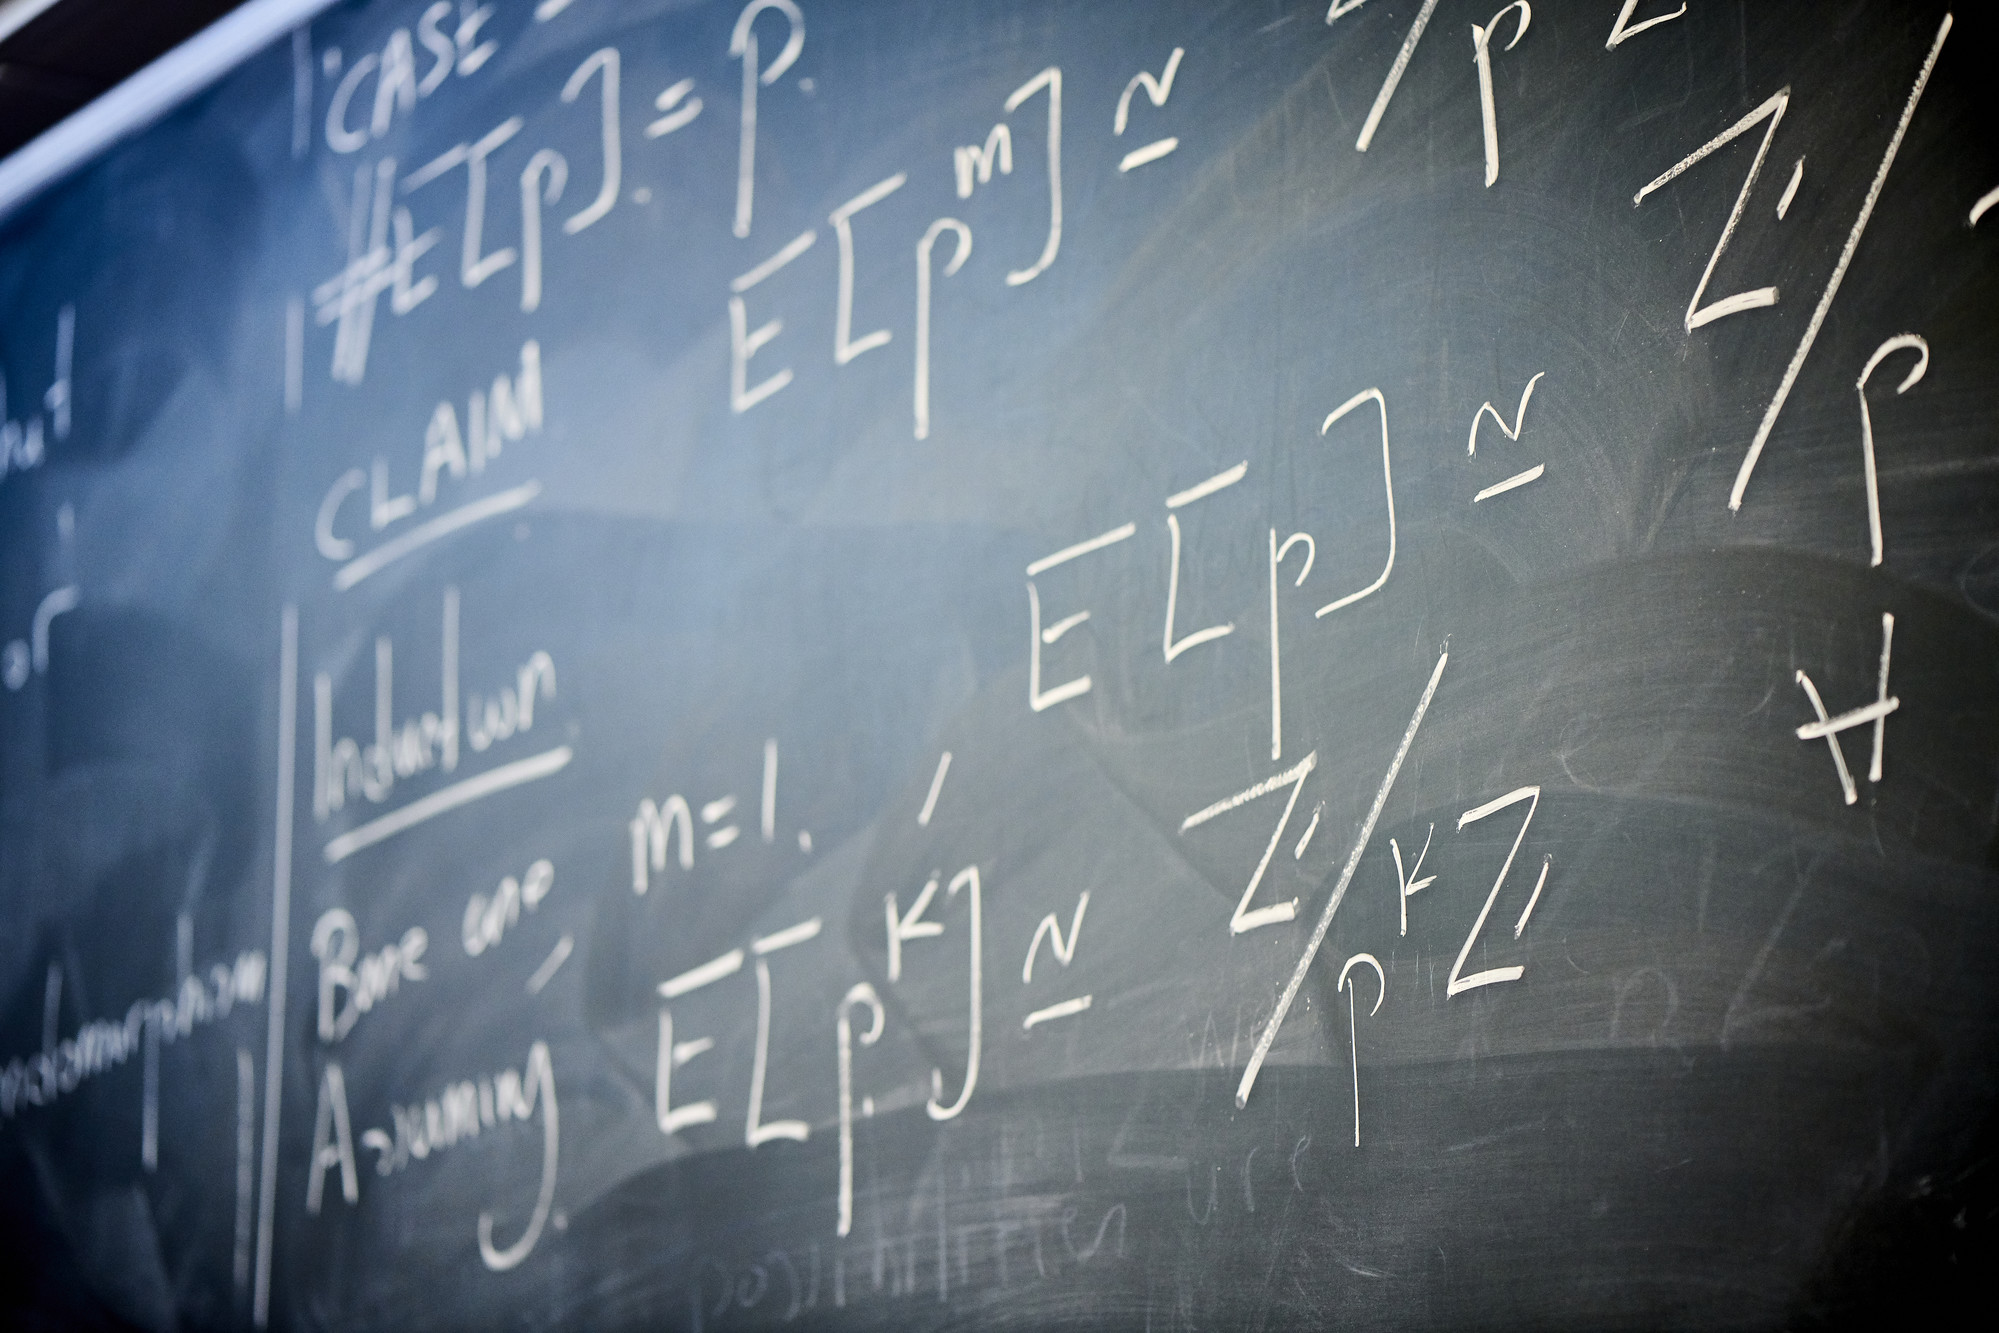 Equations on blackboard